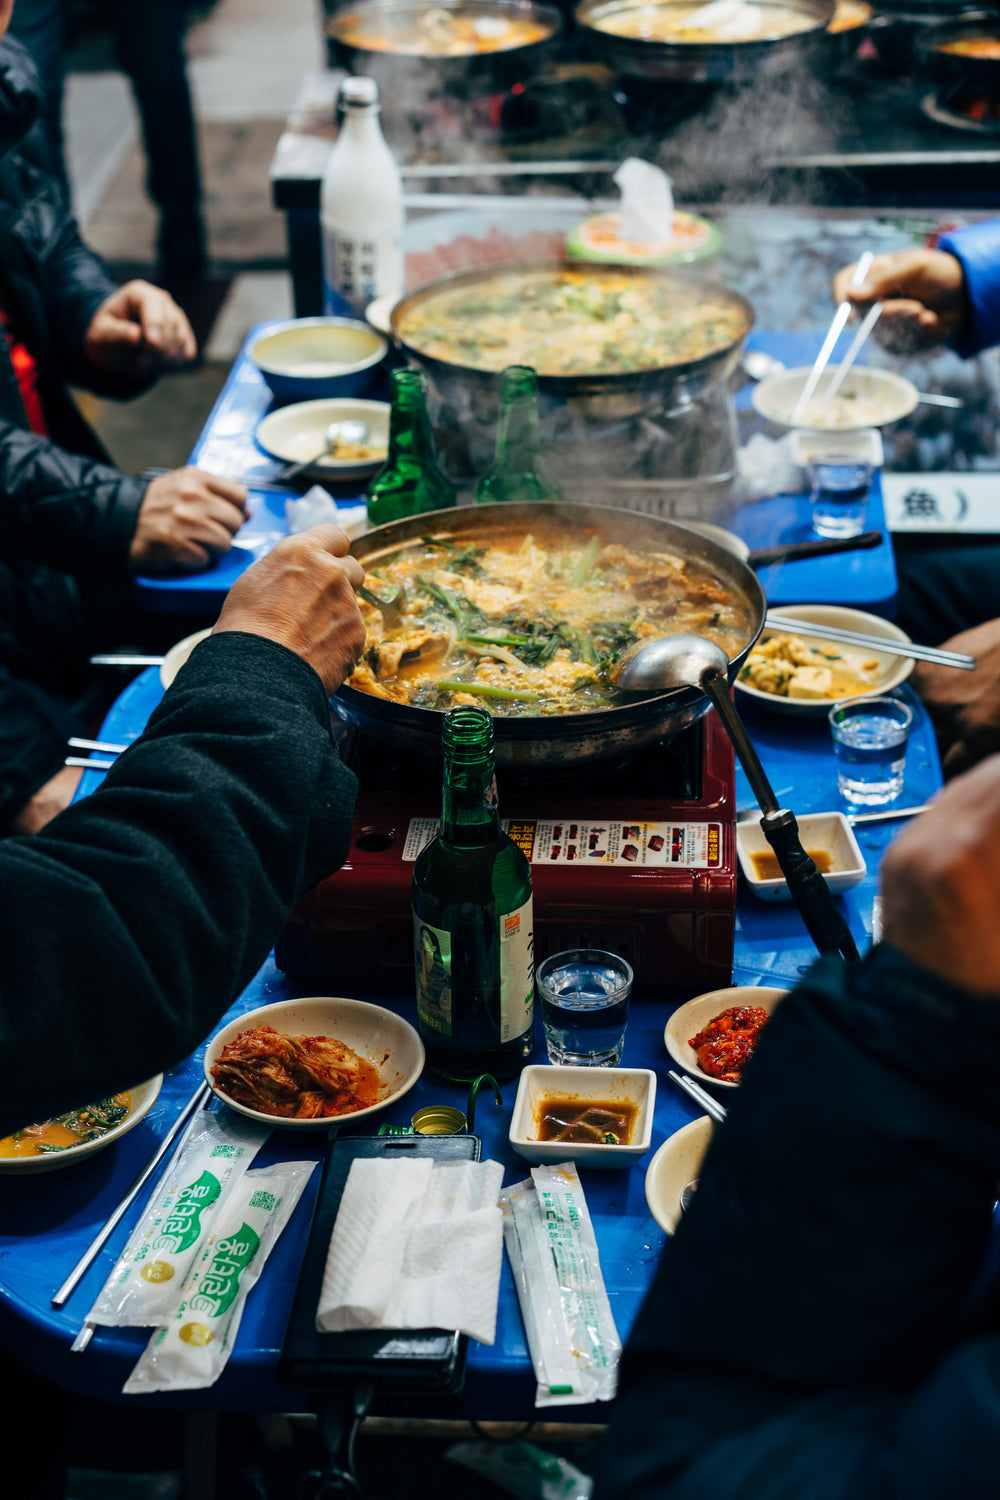 people enjoy asian cuisine together